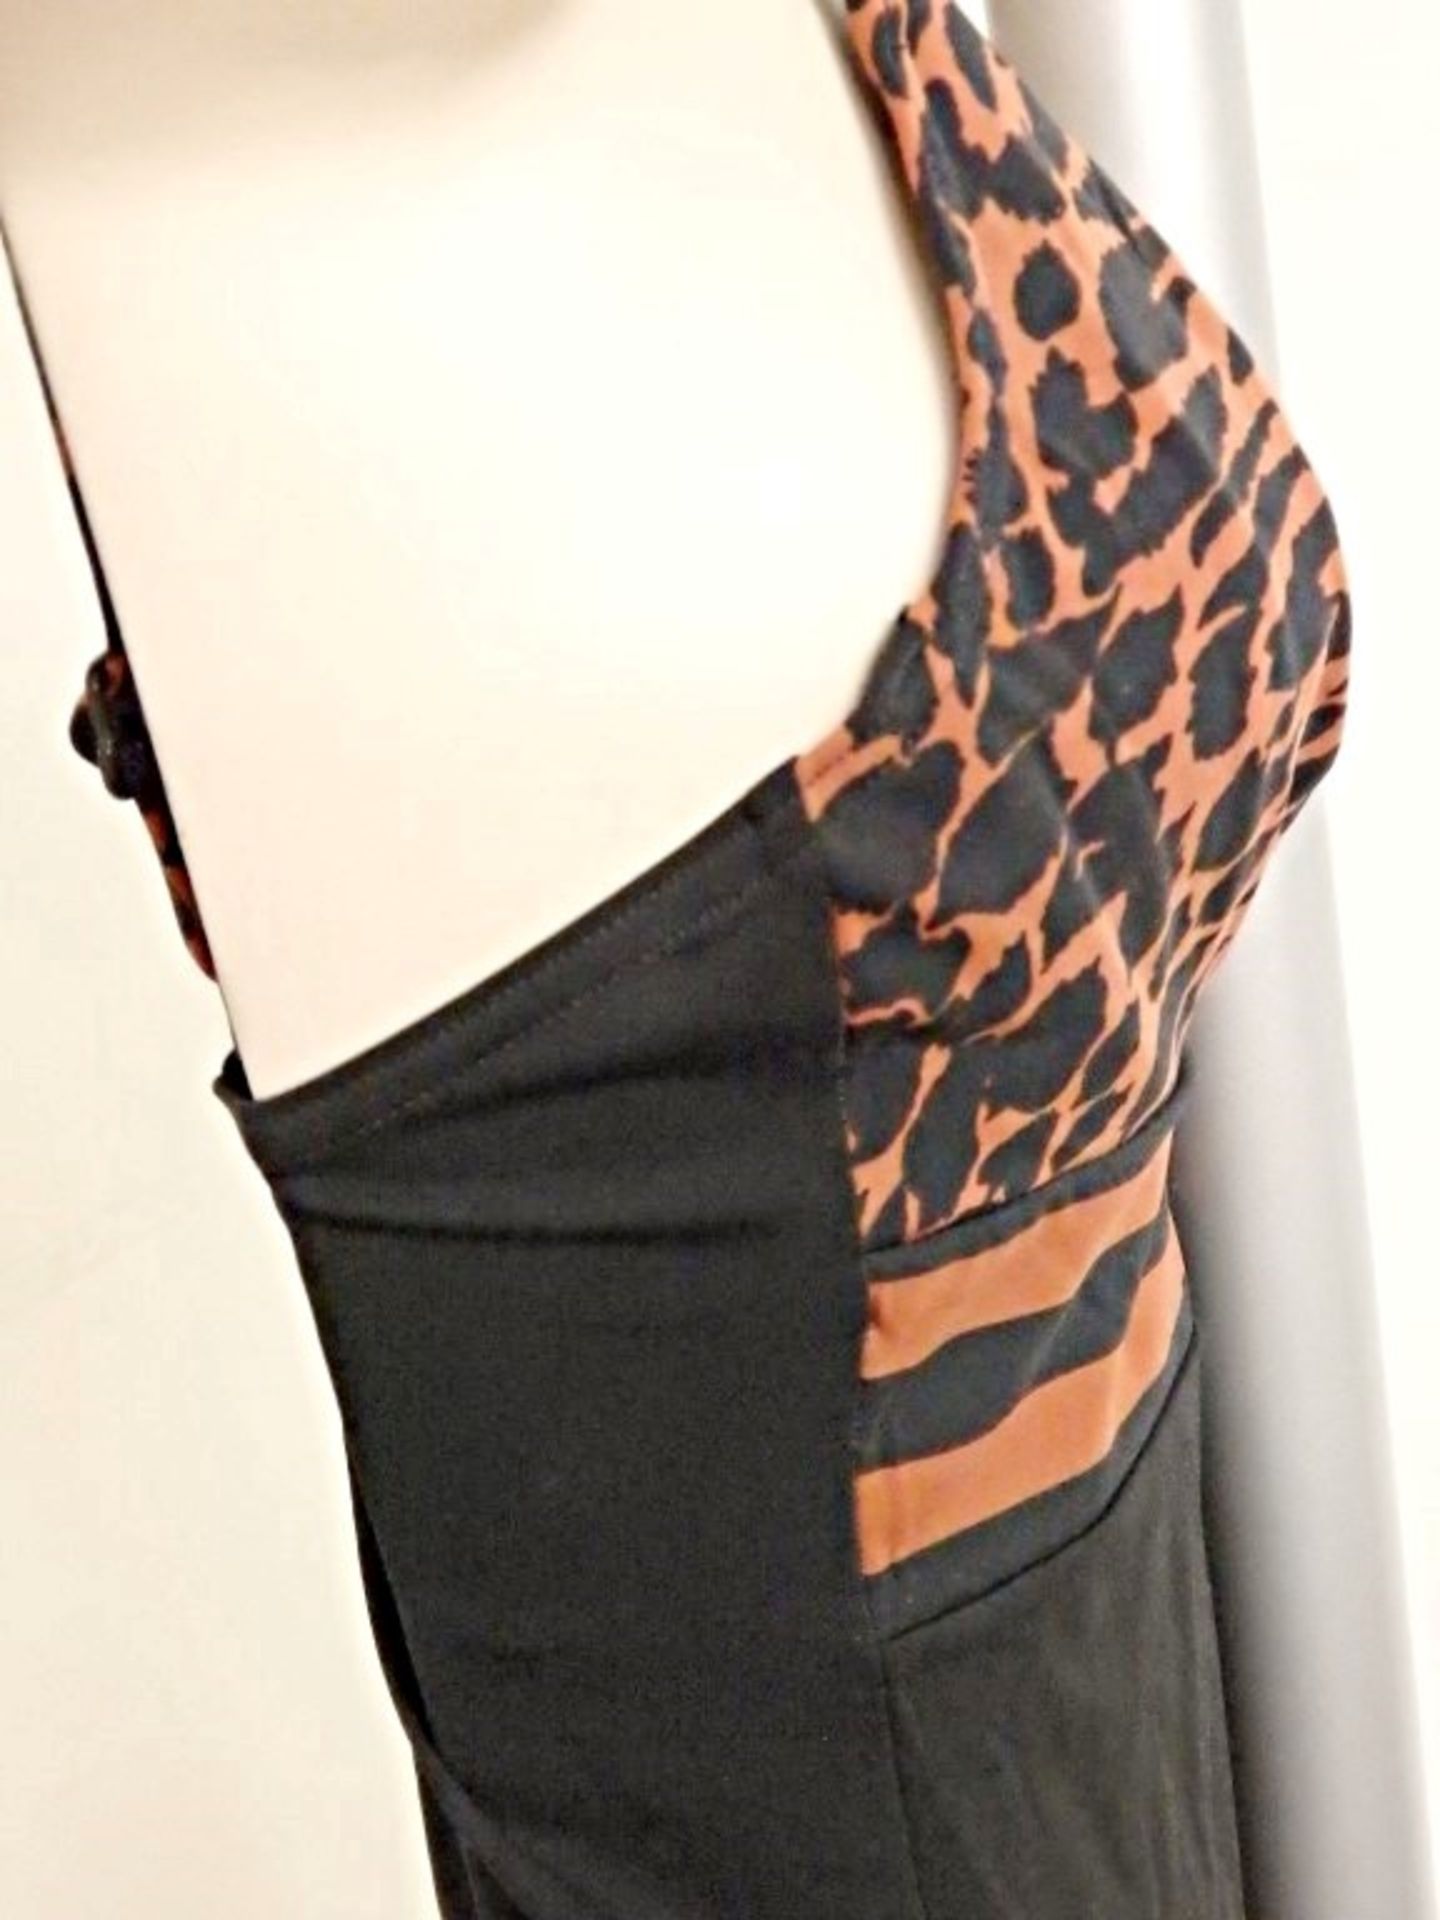 1 x Rasurel - Black/Tan Leopard and Stripe - Bahia Swimsuit - R21235 - Size 2C - UK 32 - Fr 85 - - Image 2 of 7